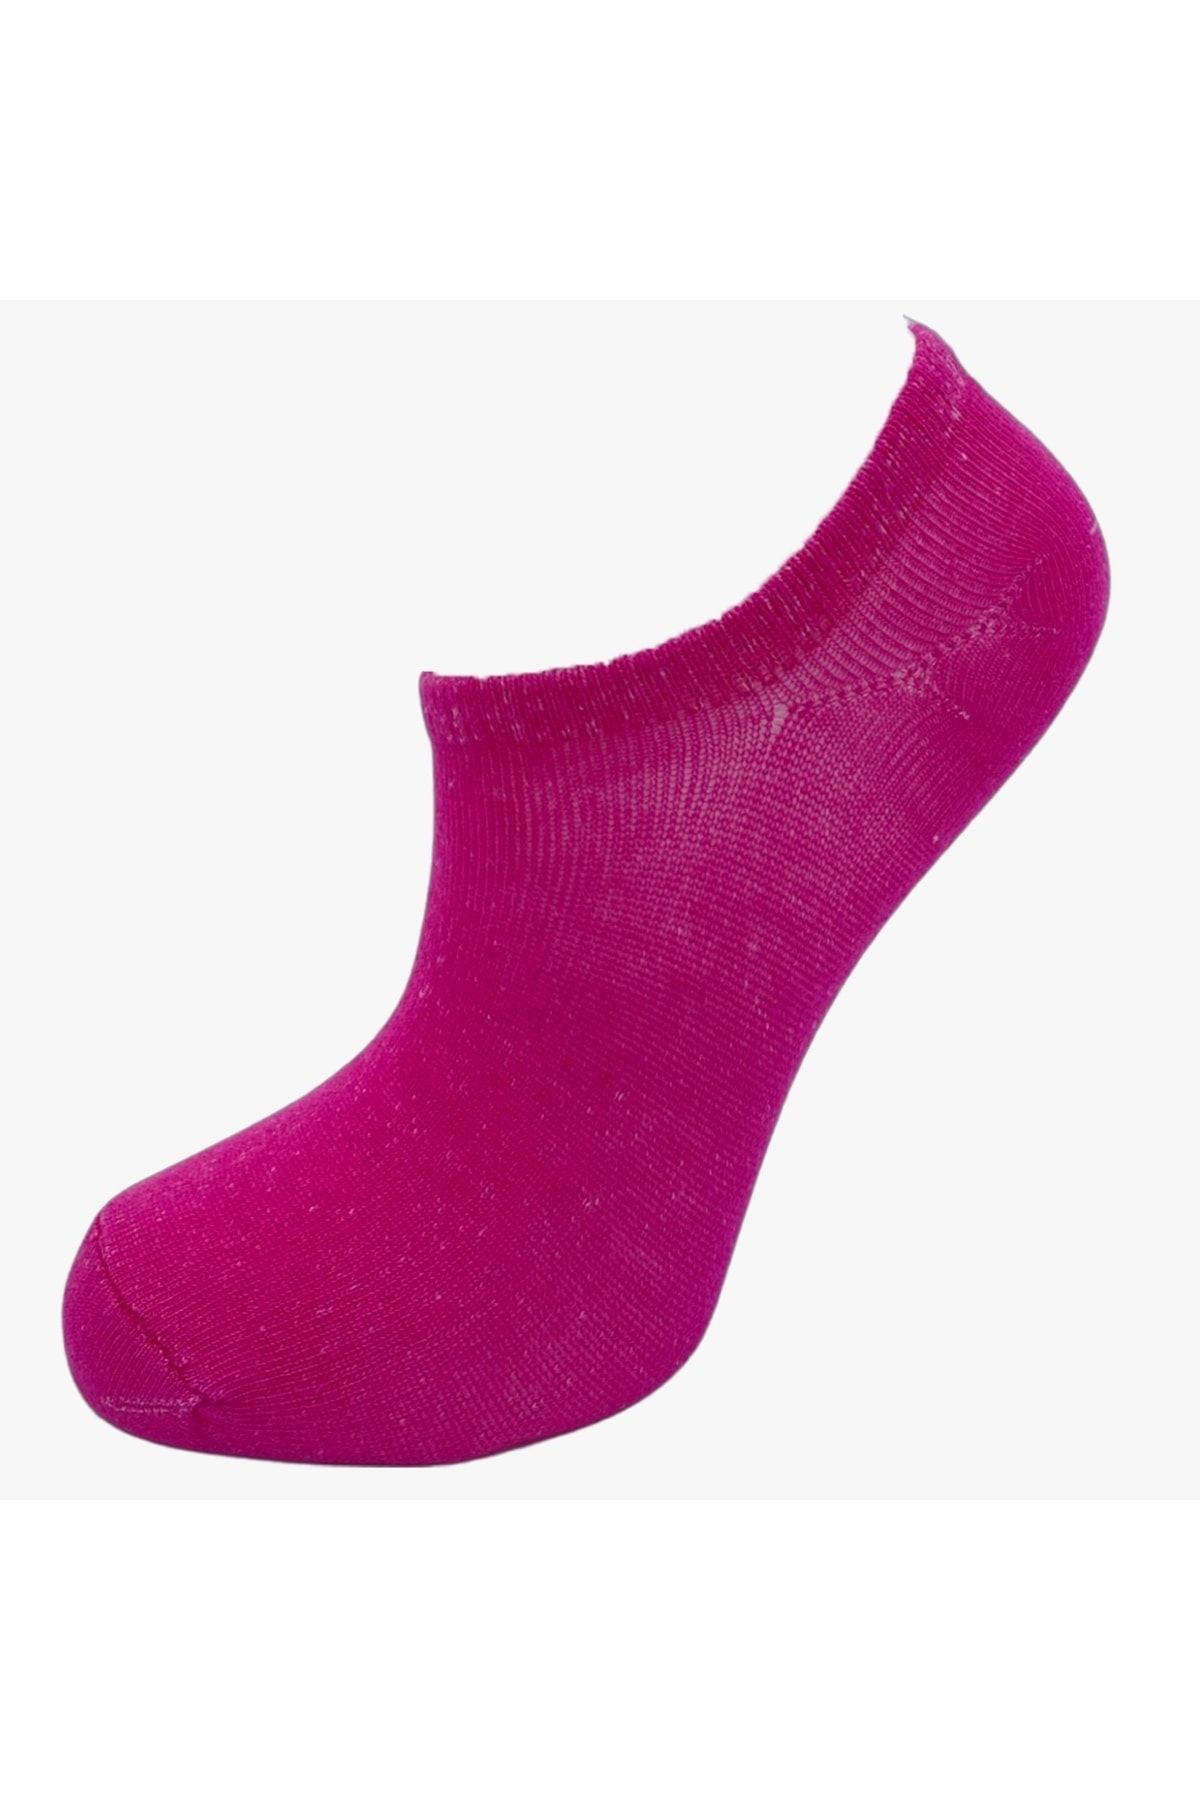 pazariz 6 Lı Patik Çorap